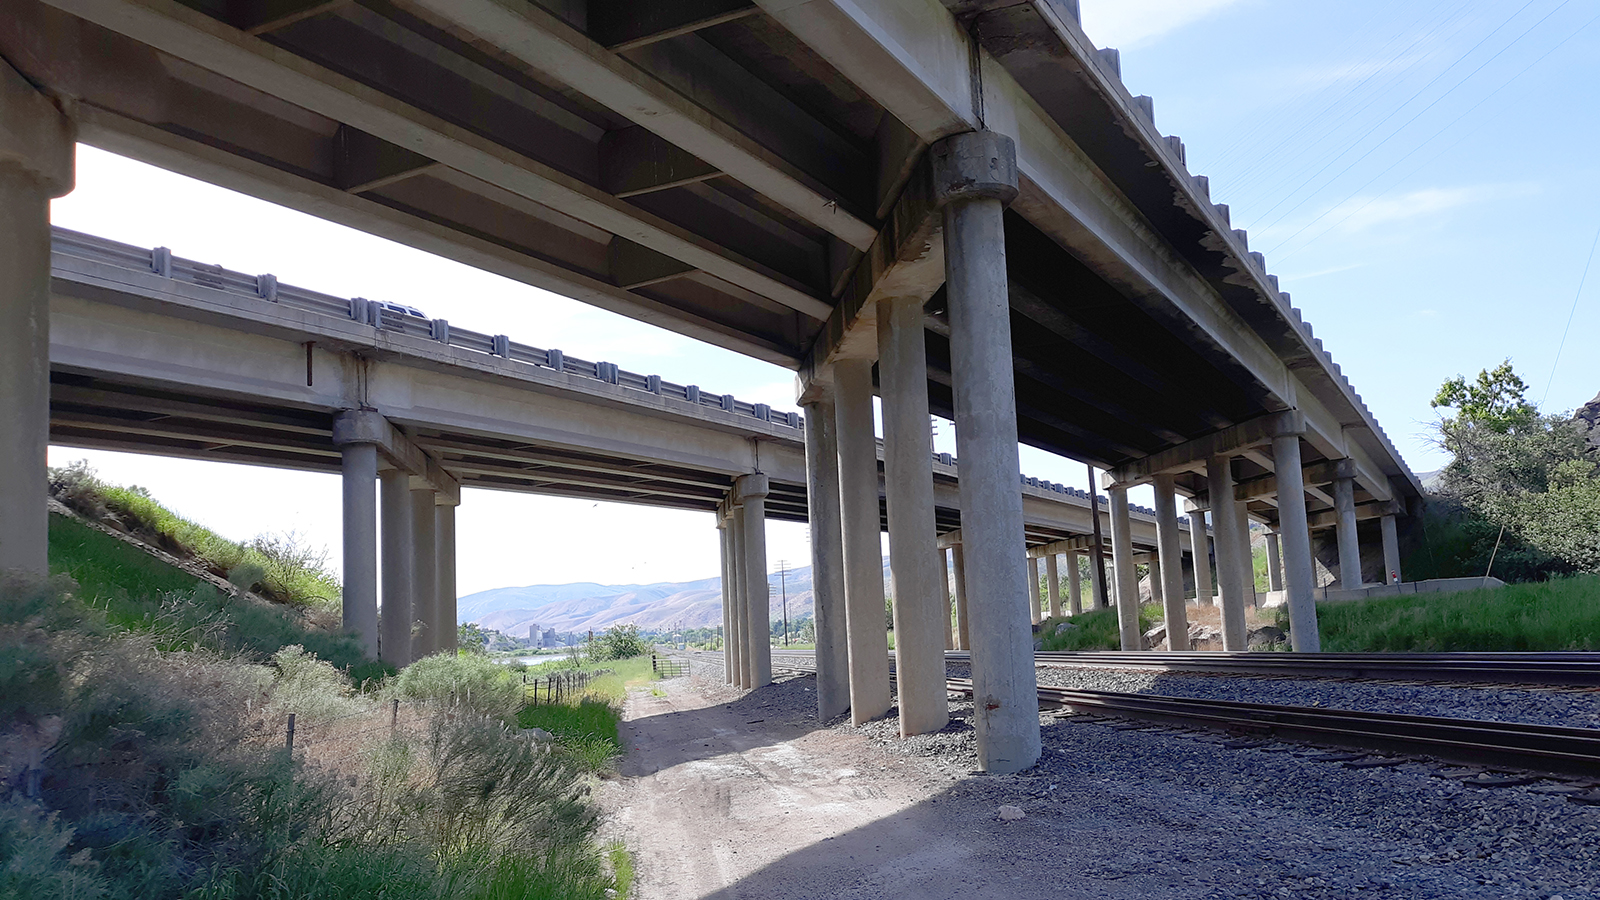 View underneath aging bridge over Union Pacific Railroad tracks.